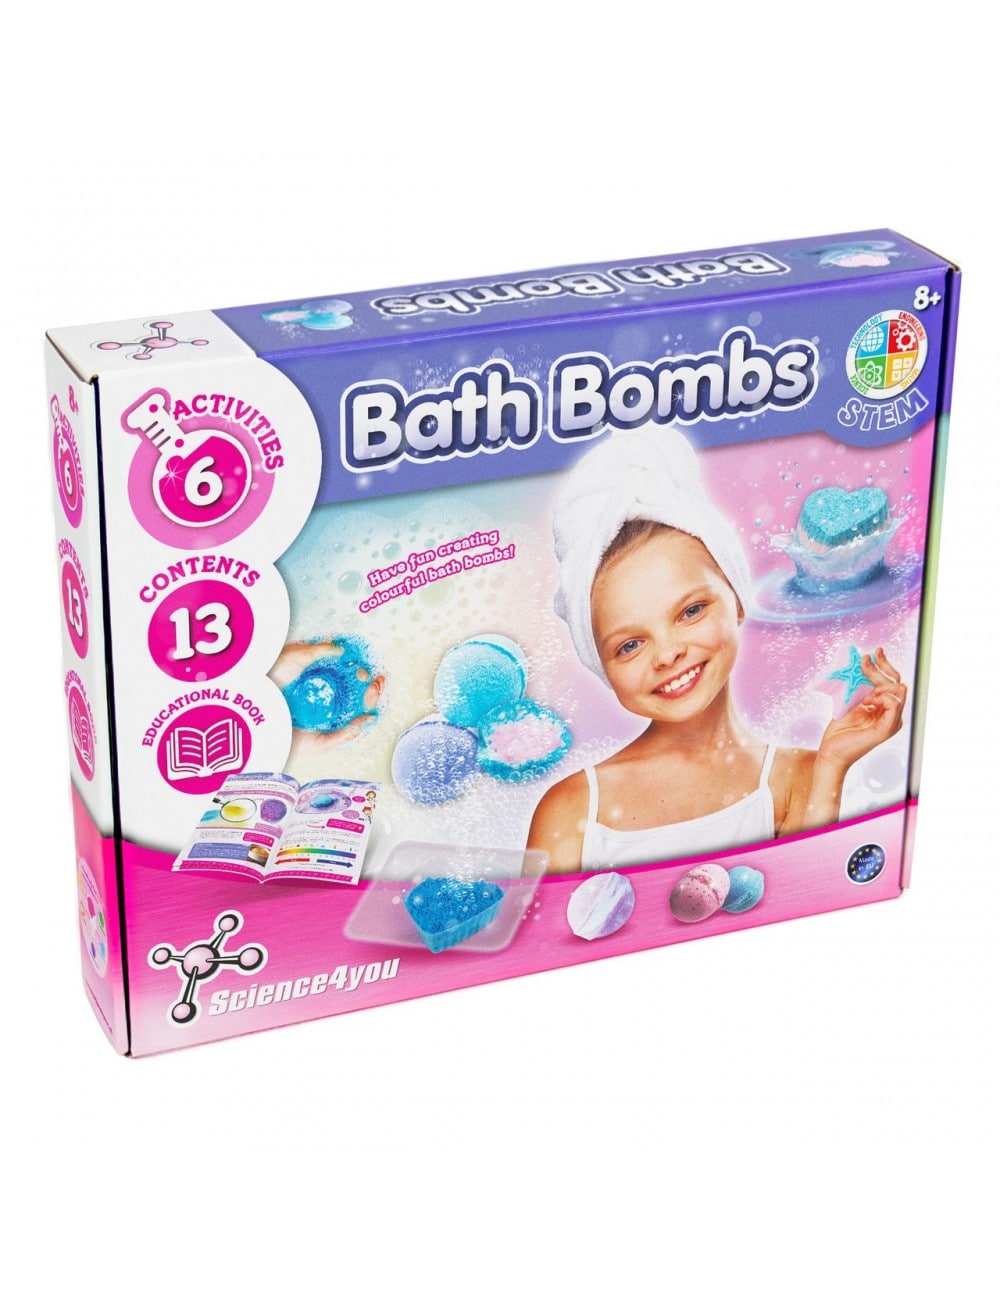 Science of Bath Bombs